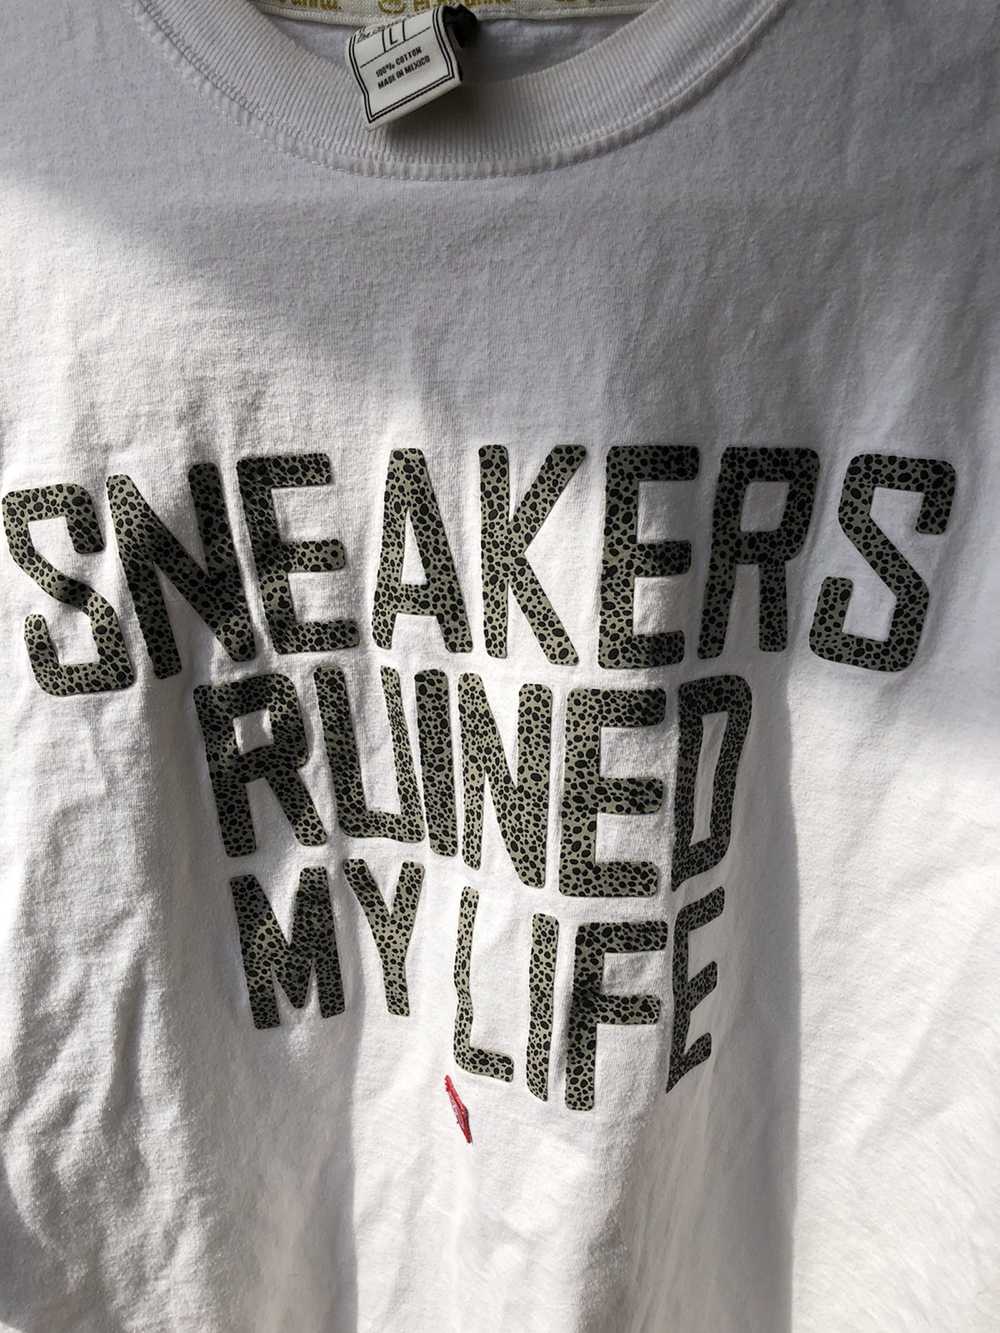 Ecko Unltd. Sneakers ruined my life shirt. White … - image 7